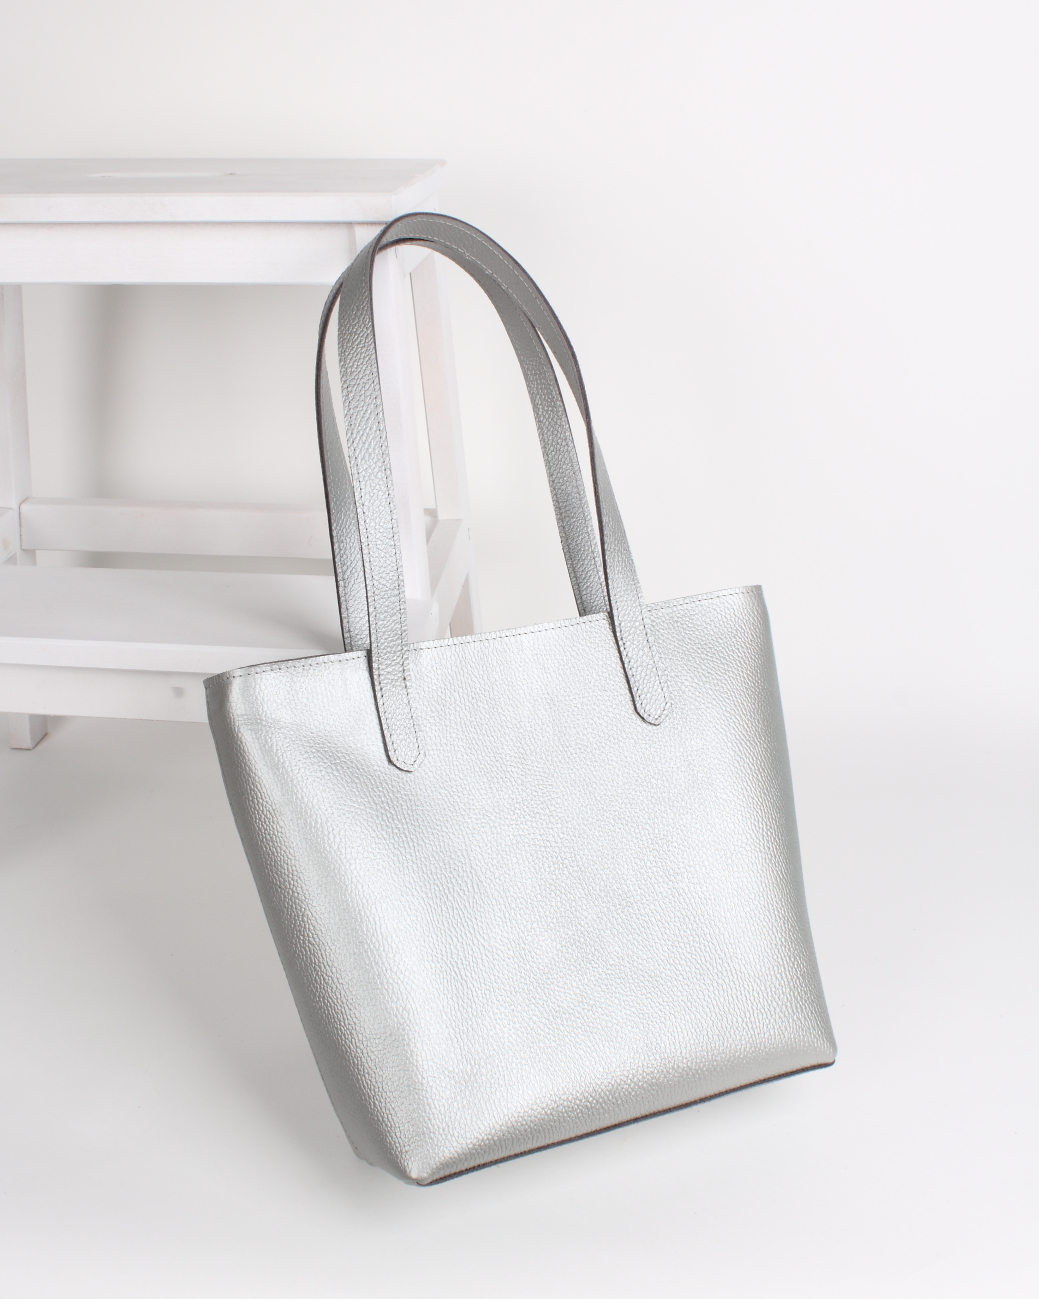 Женская кожаная сумка шоппер серебристая A019 silver grain